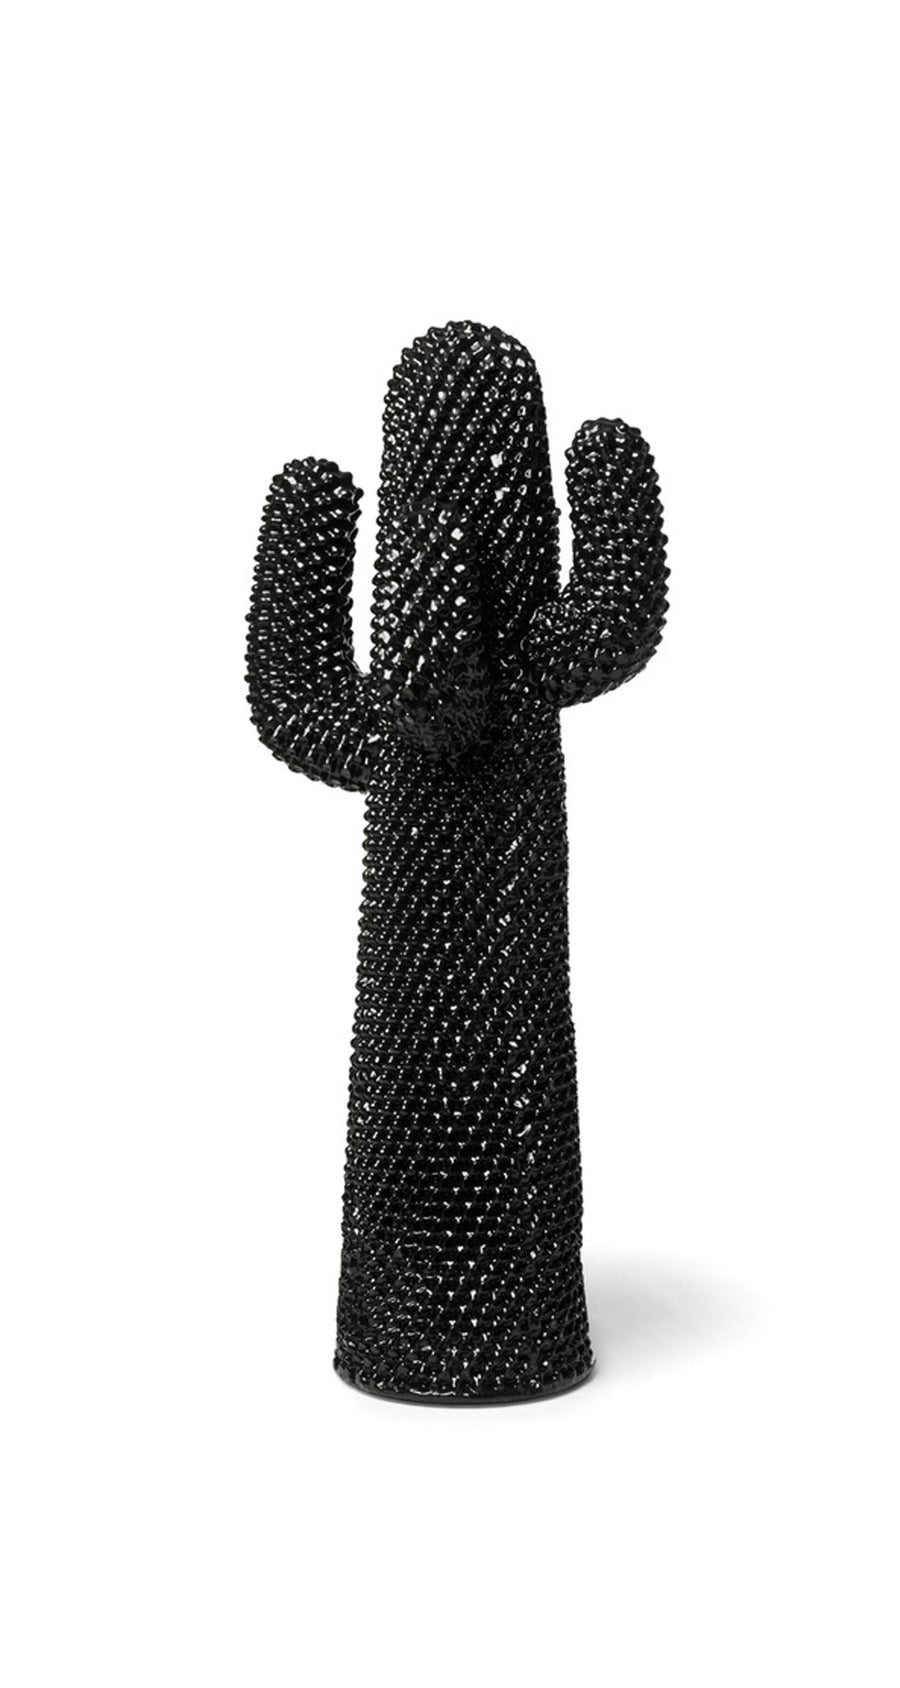 Cactus - Nerocactus - Porte-manteau - Sculpture